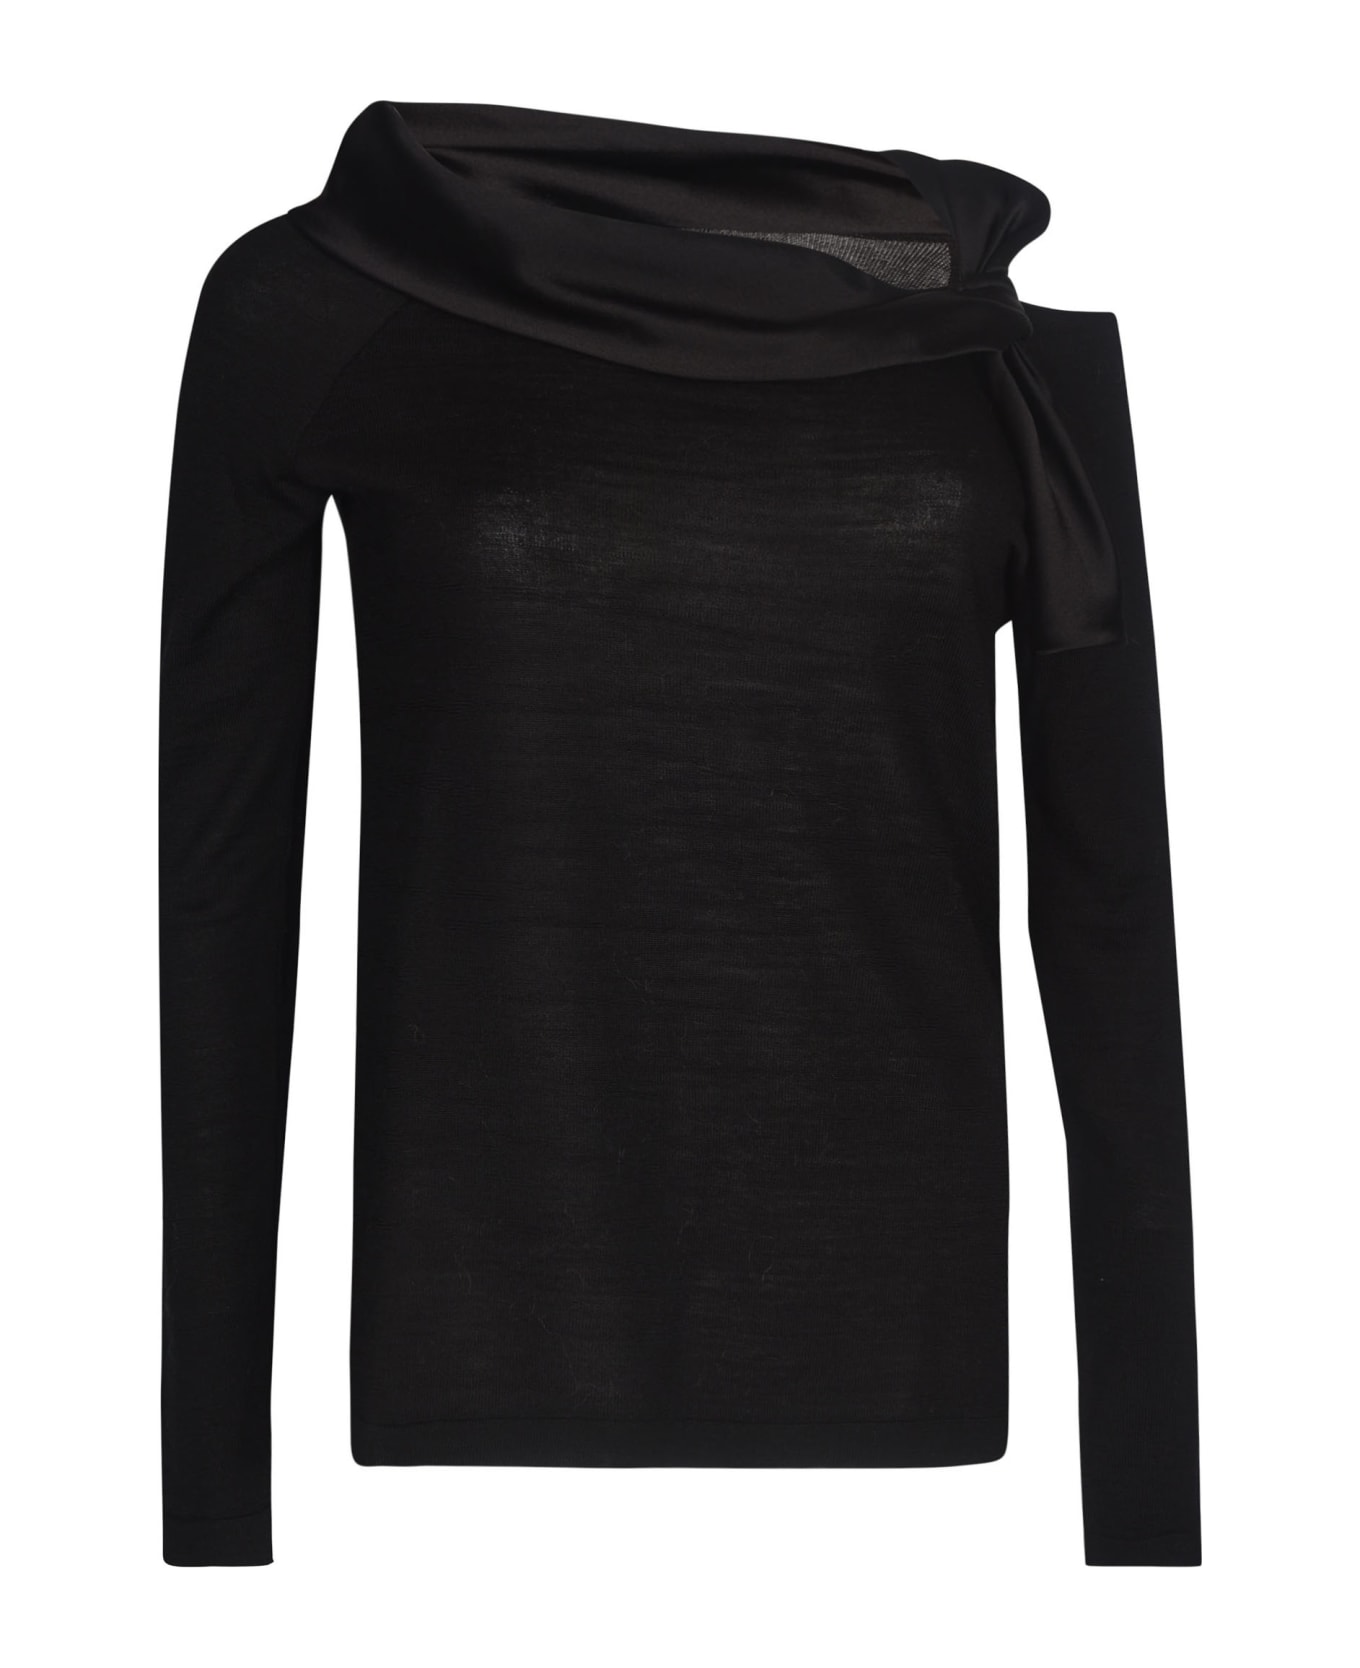 Alberta Ferretti Bow Detailed Long Sleeved Top - Black